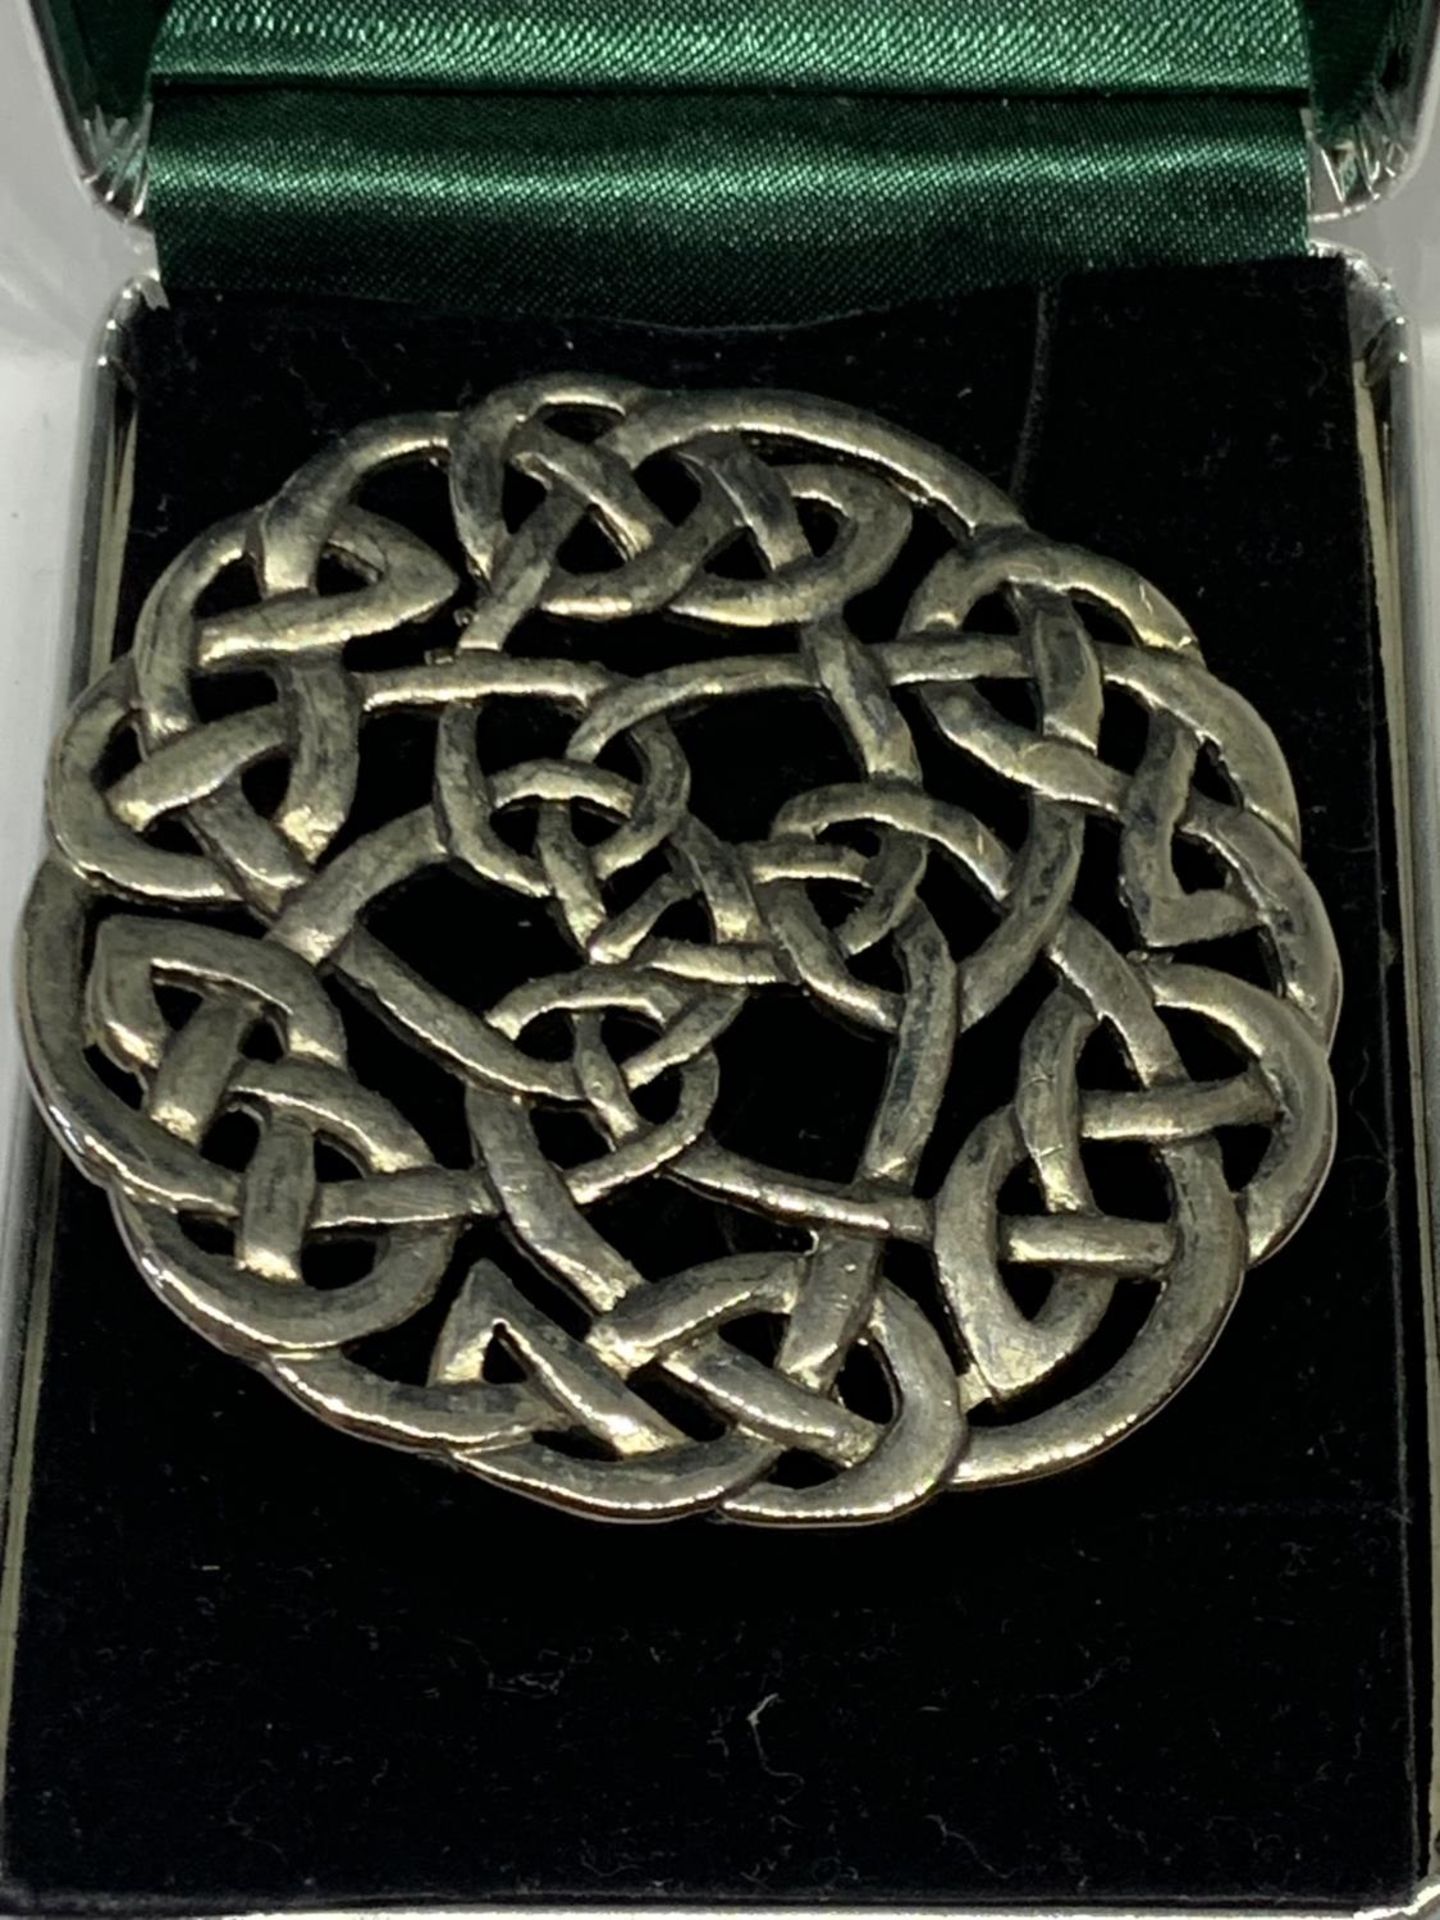 AN IRISH CELTIC BROOCH IN A PRESENTATION BOX - Image 2 of 3